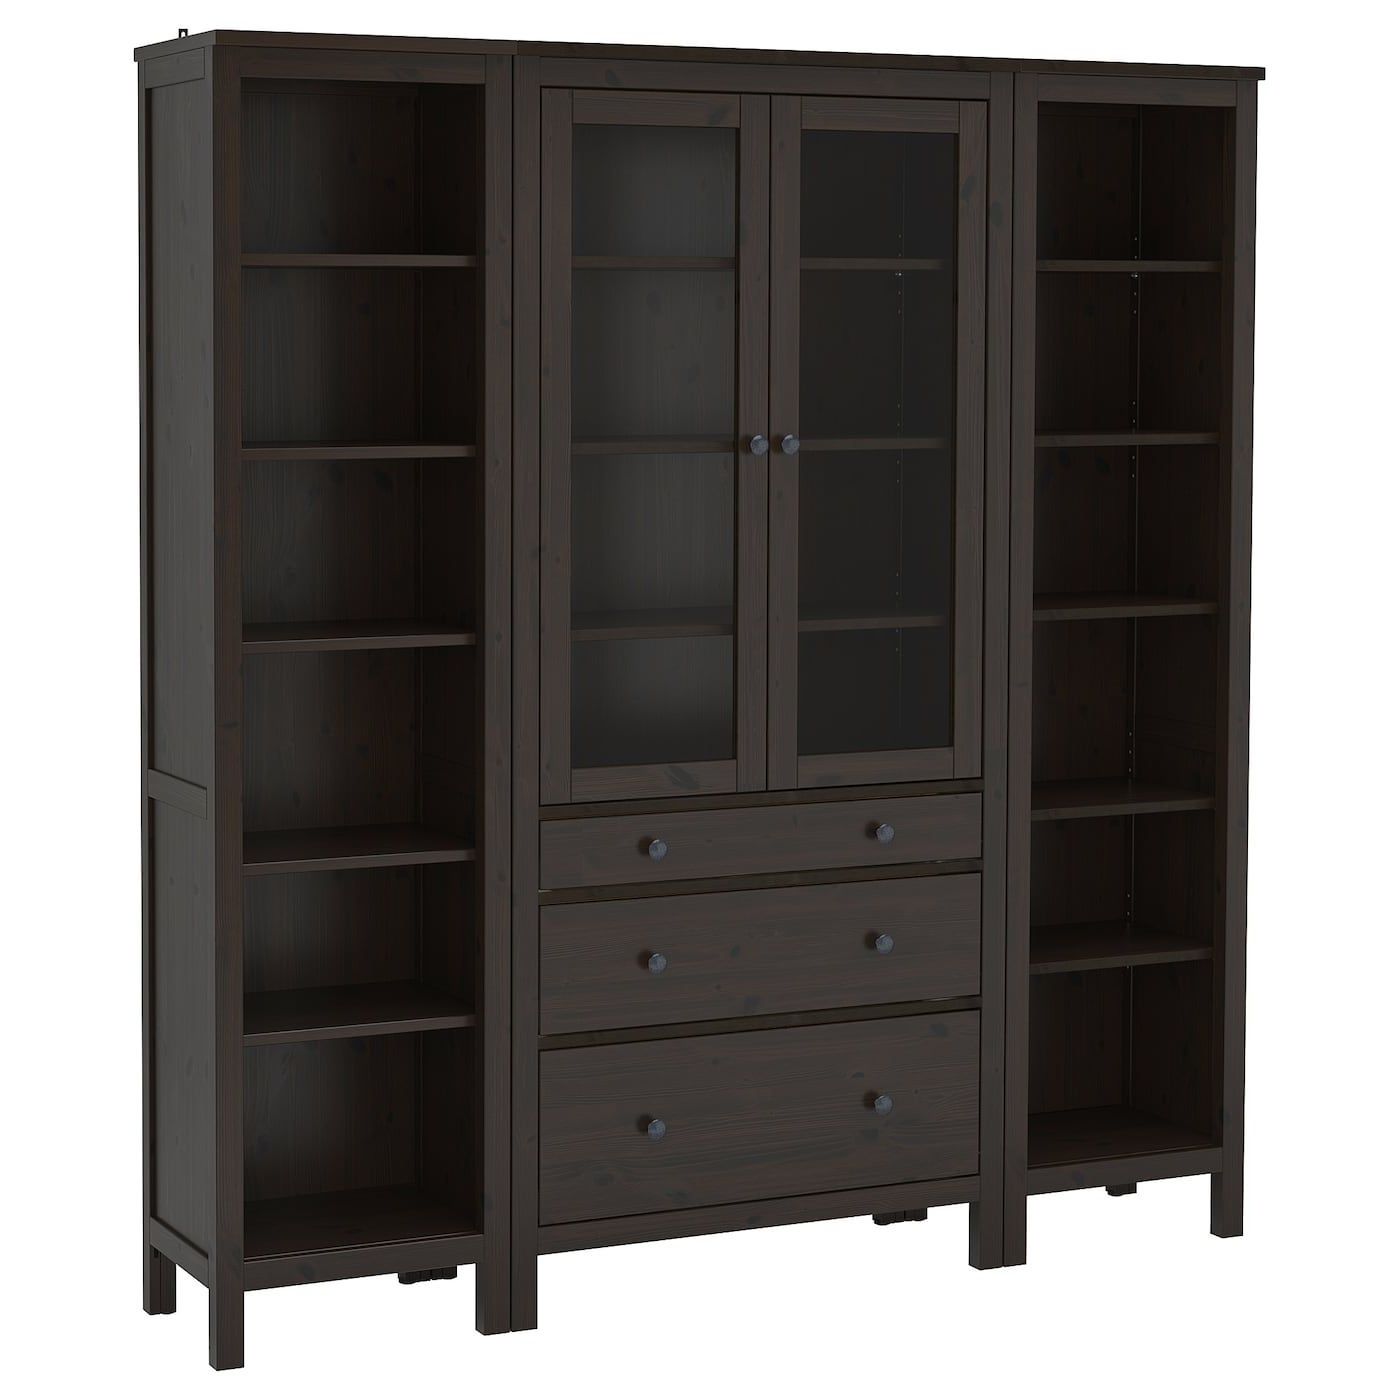 Hemnes Storage Combination W Doors/drawers, Black Brown Regarding Dark Brown Tv Cabinets With 2 Sliding Doors And Drawer (Gallery 16 of 20)